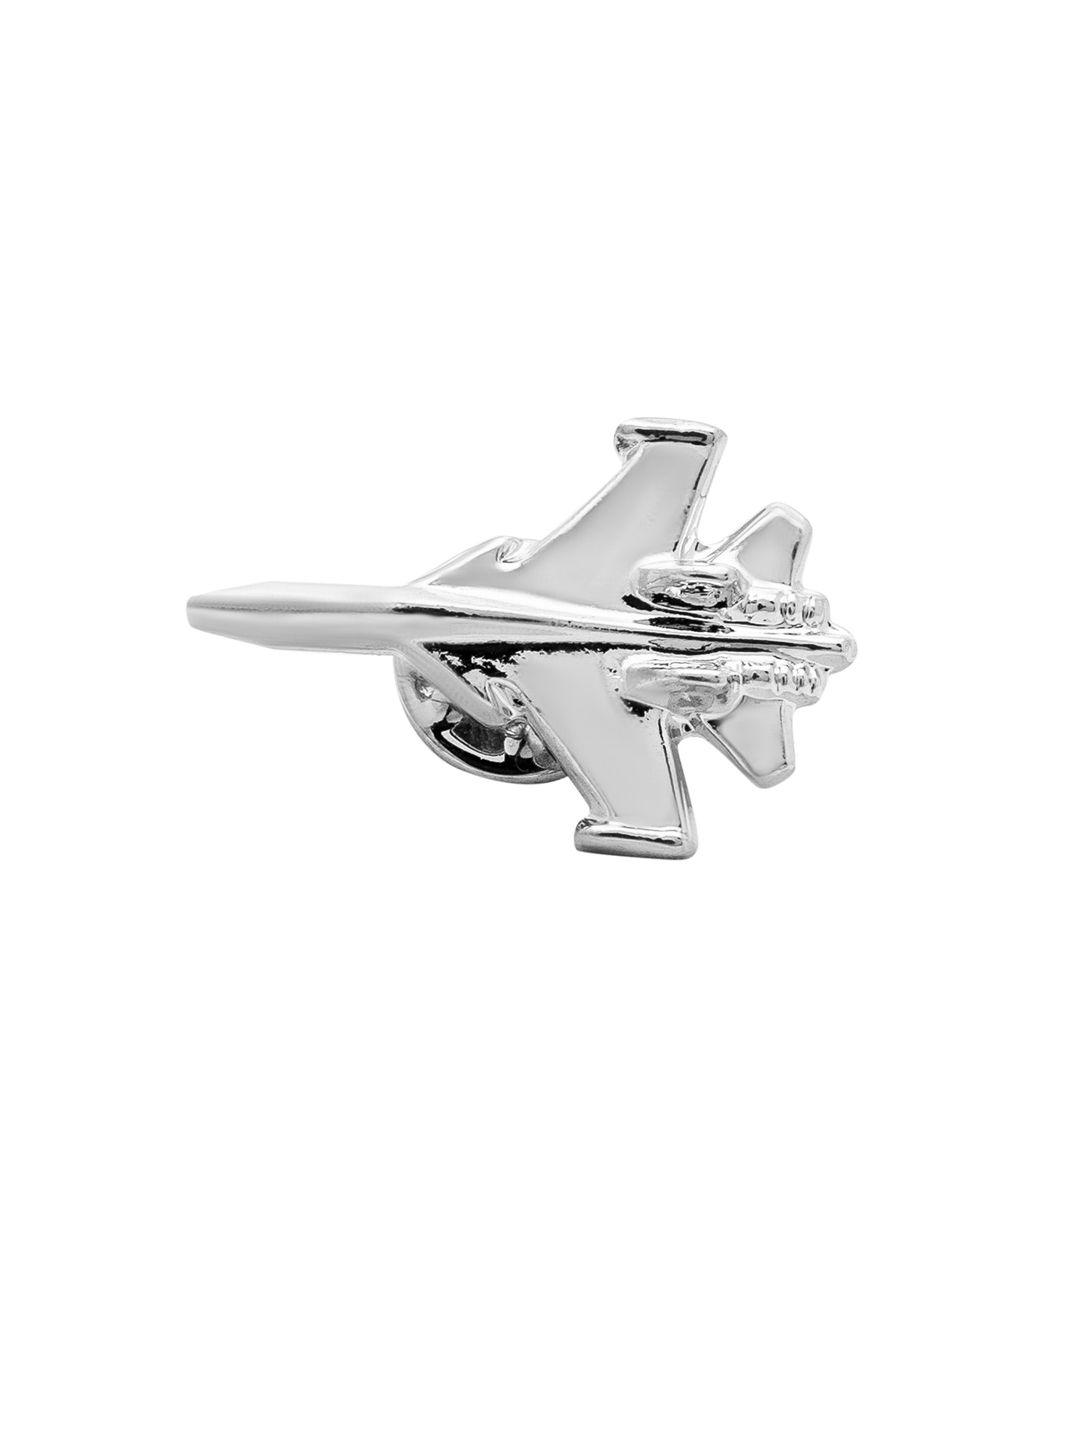 shining jewel - by shivansh men silver-toned fighter jet aircraft design brooch